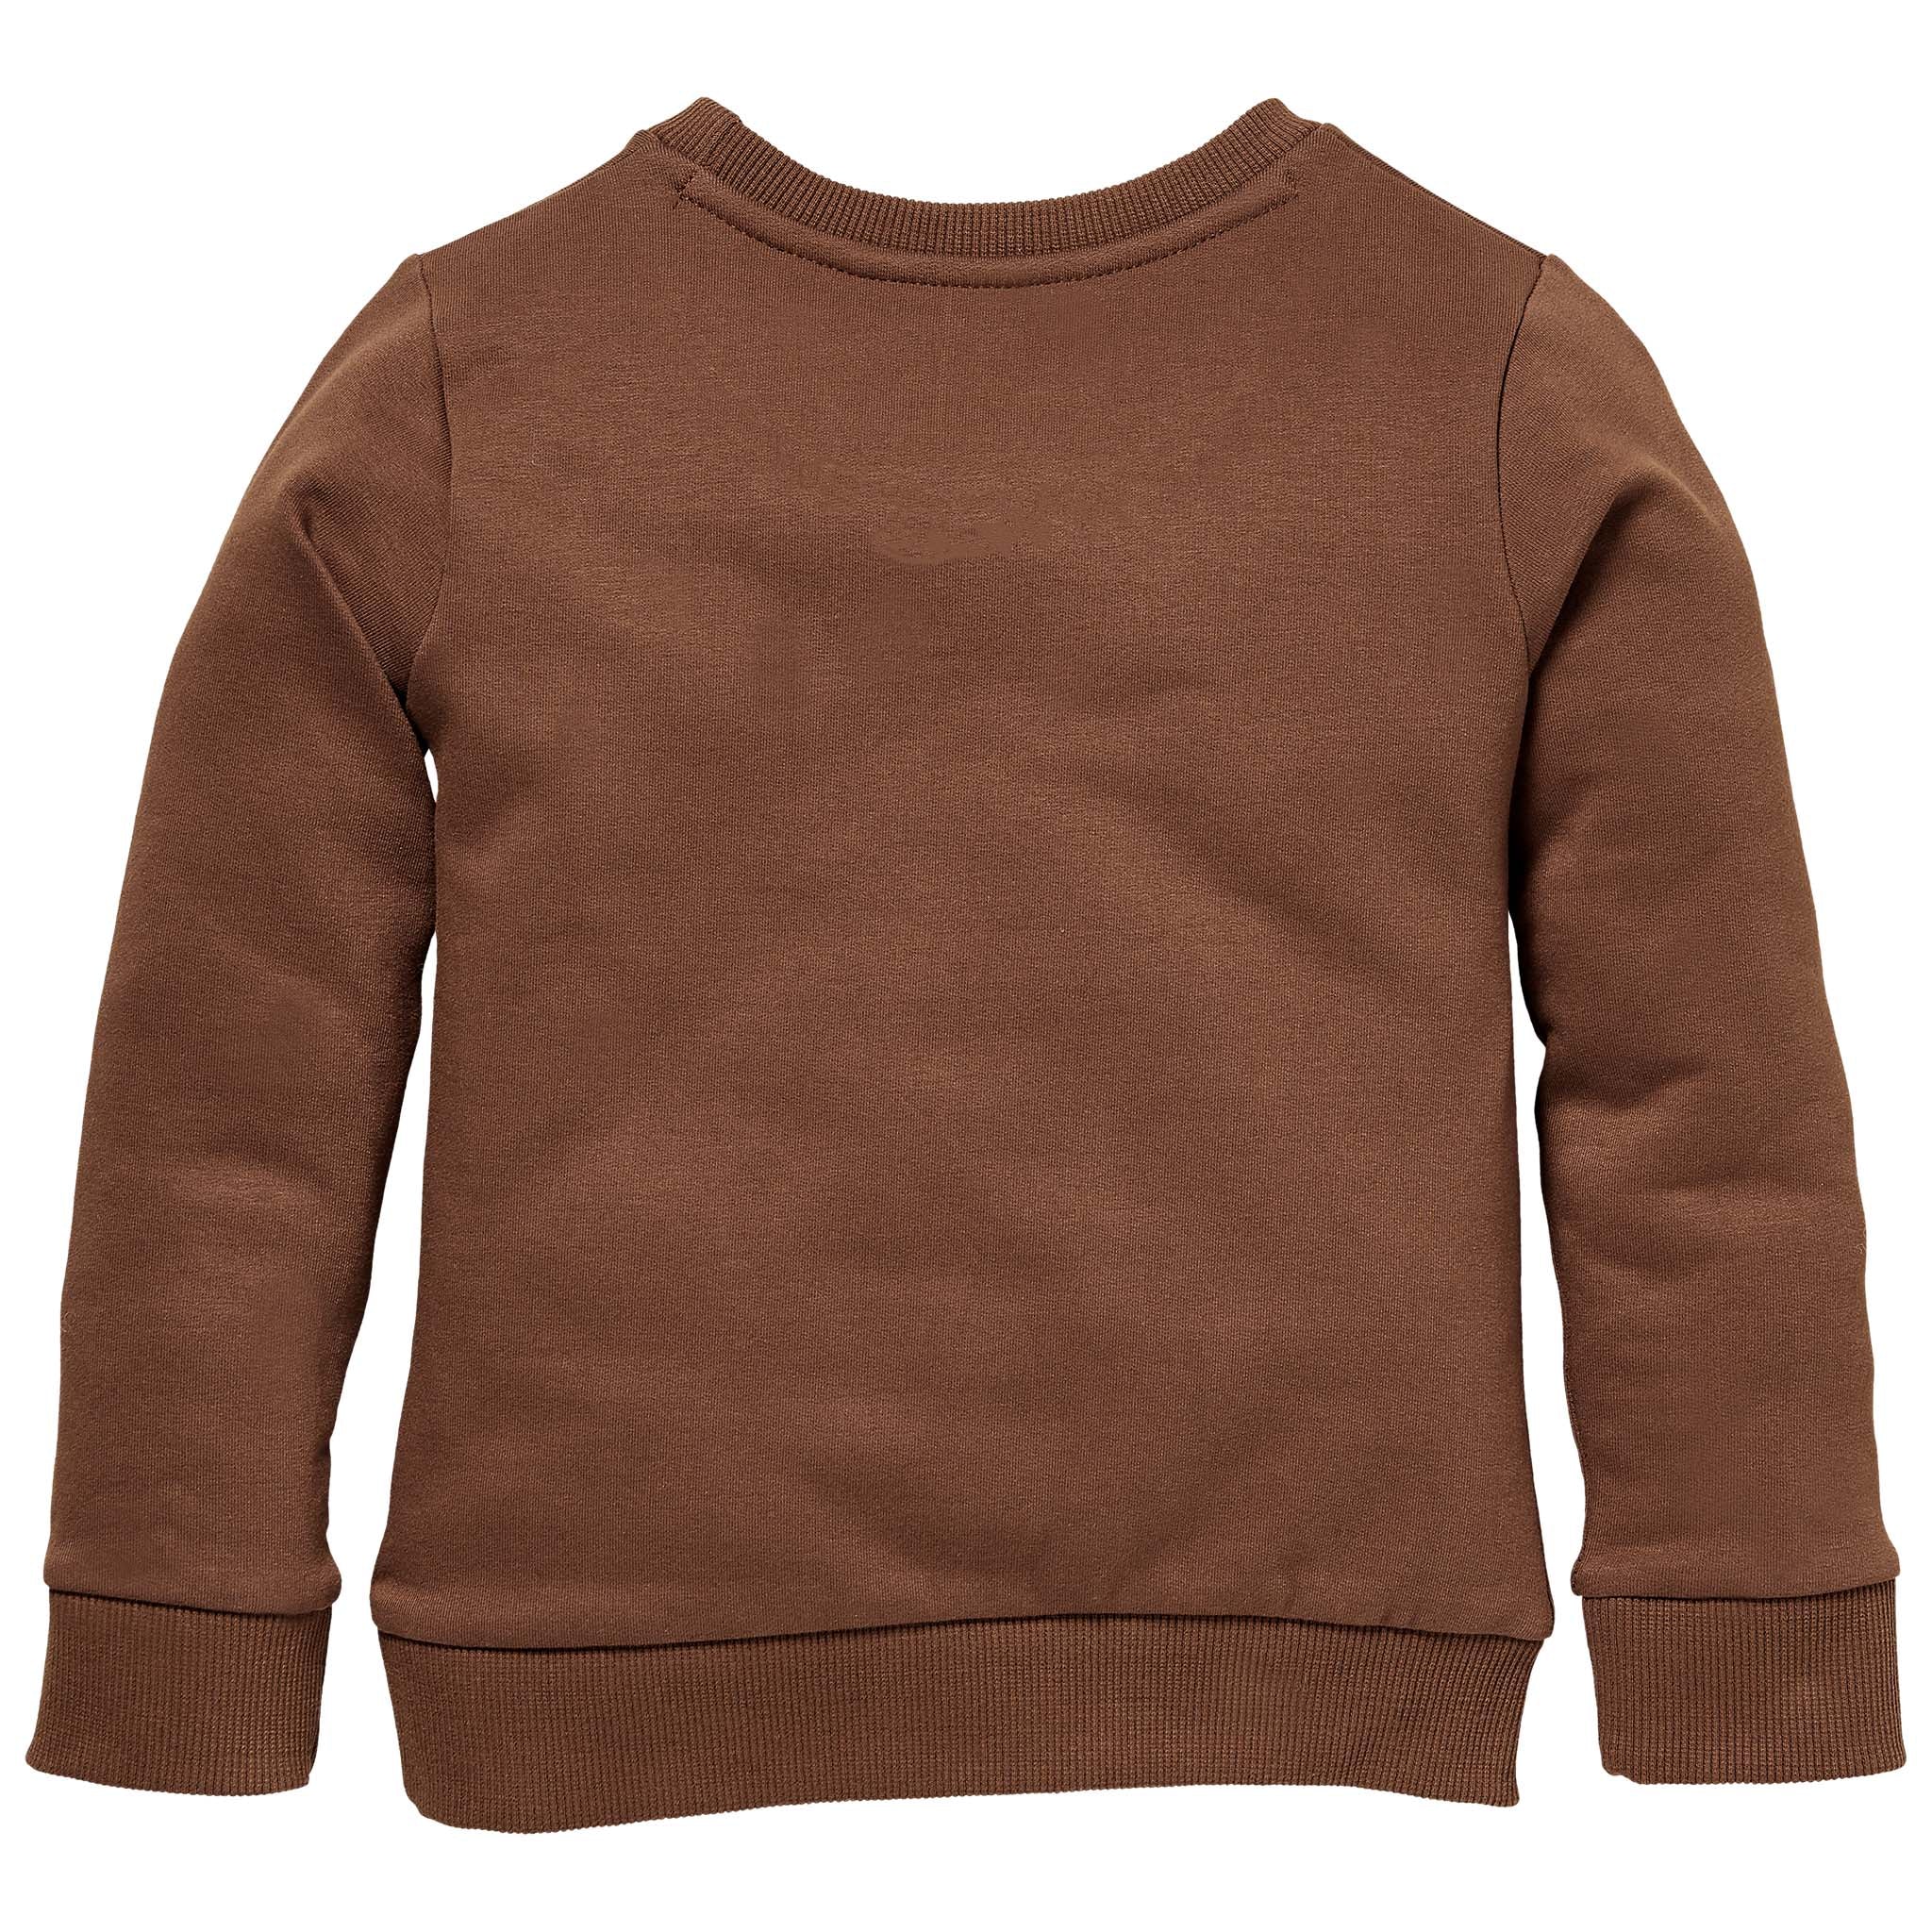 Meisjes Sweater SHEILA W212 van Little Levv in de kleur Rust in maat 116.